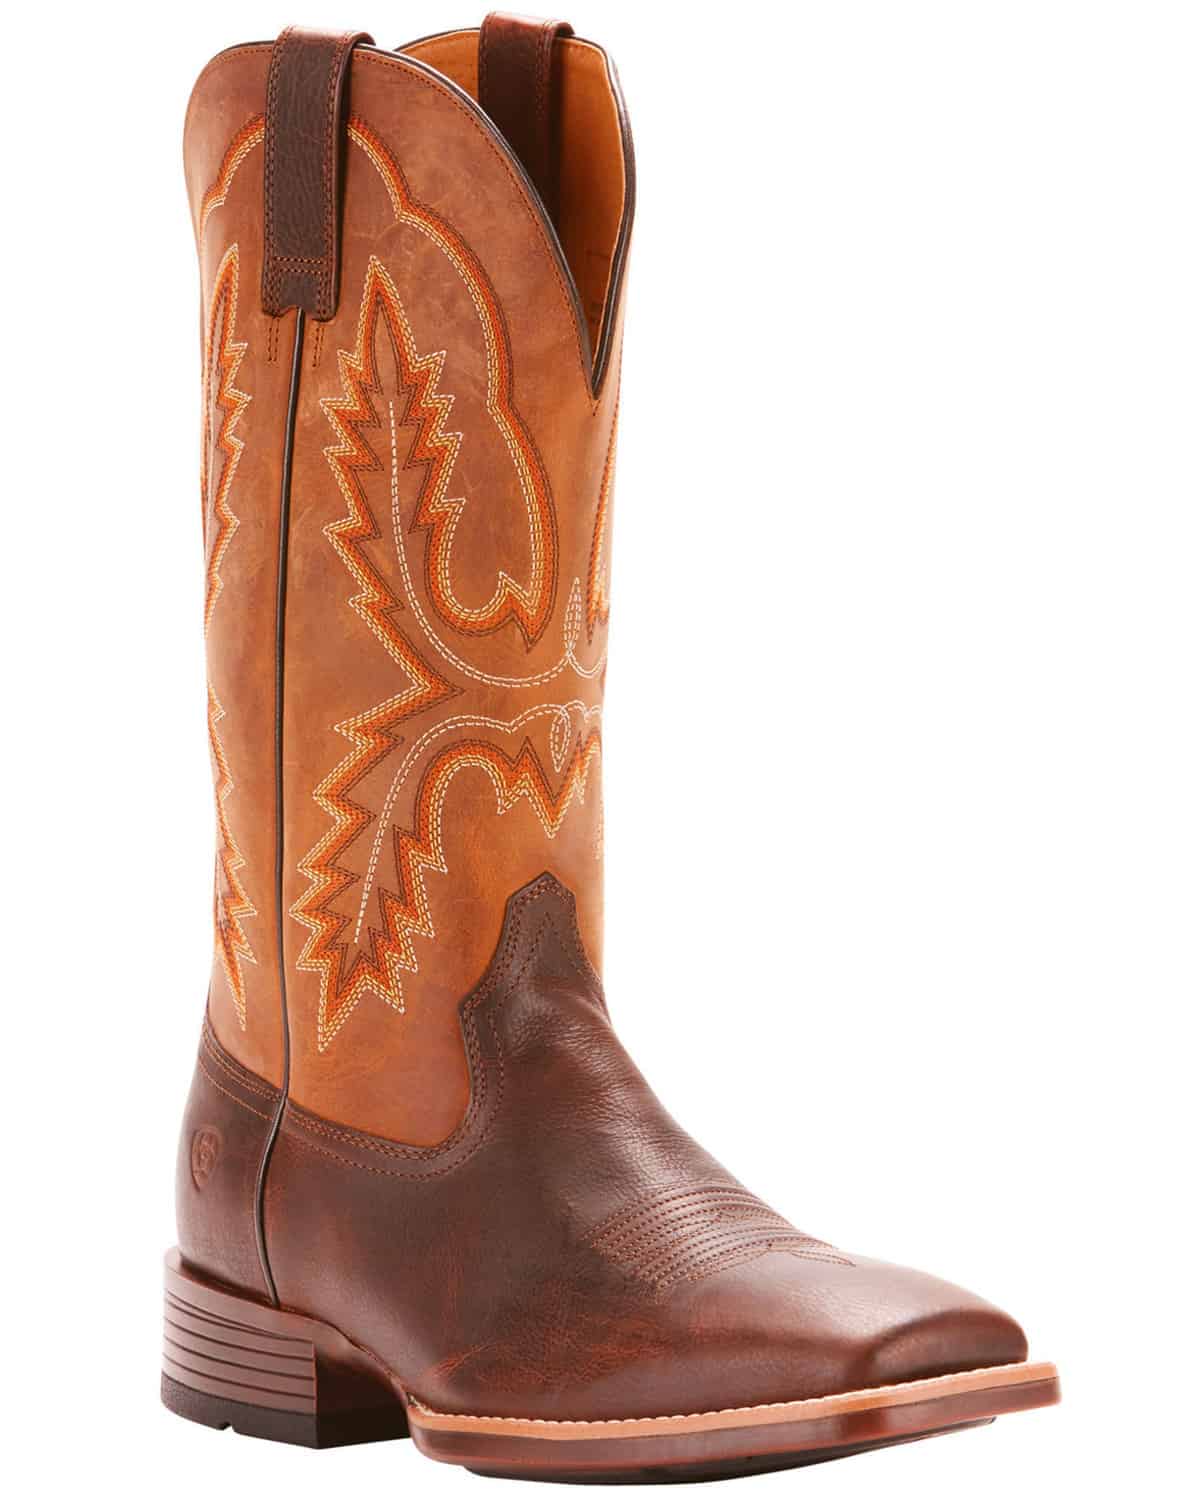 Broad Square Toe Cowboy Boots